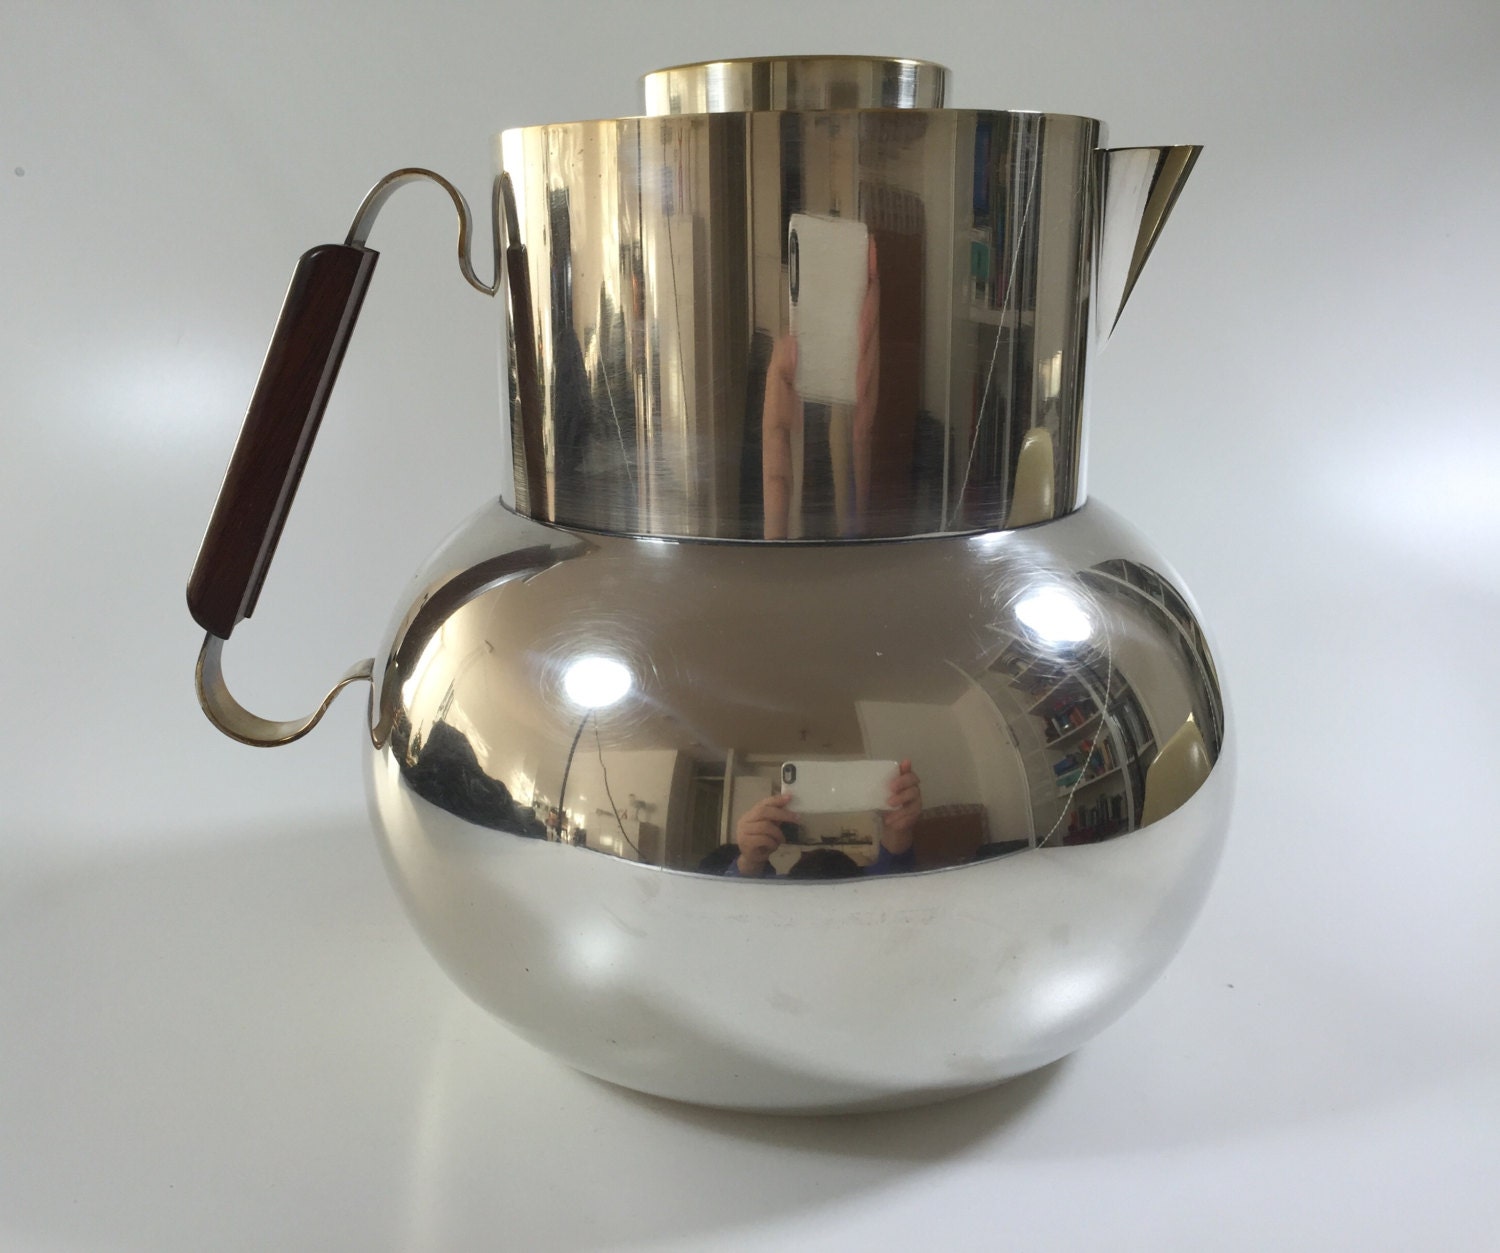 Teghini Firenze silver plated huge jug. Simple as Georg